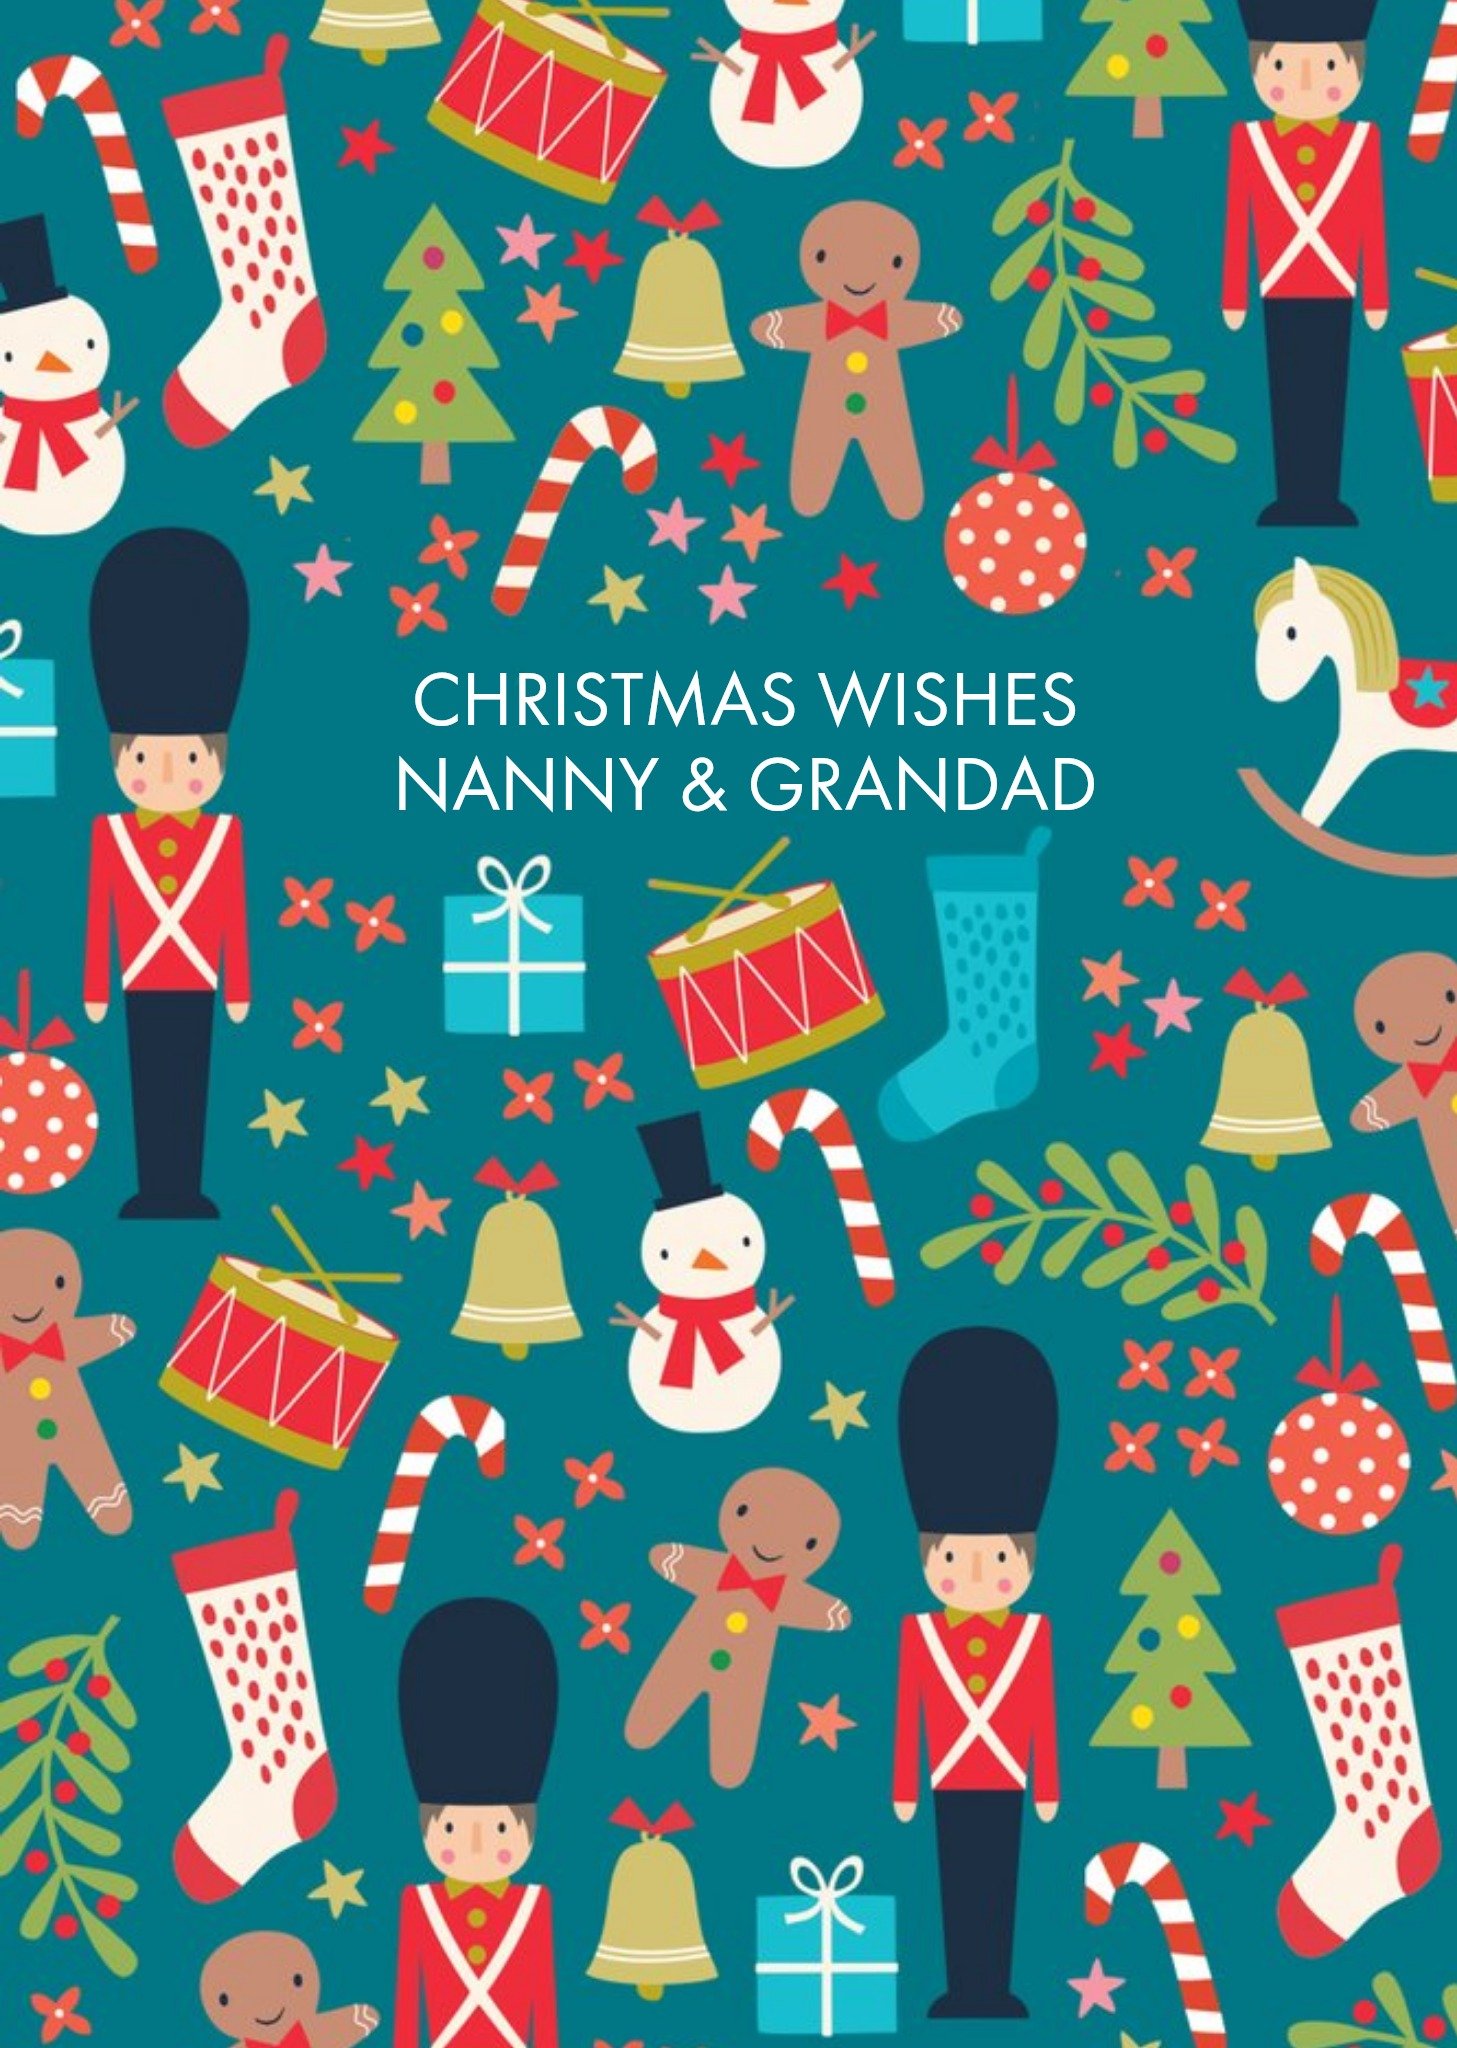 Moonpig Gingerbread Man Christmas Card Christmas Wishes For Nanny & Granda Ecard